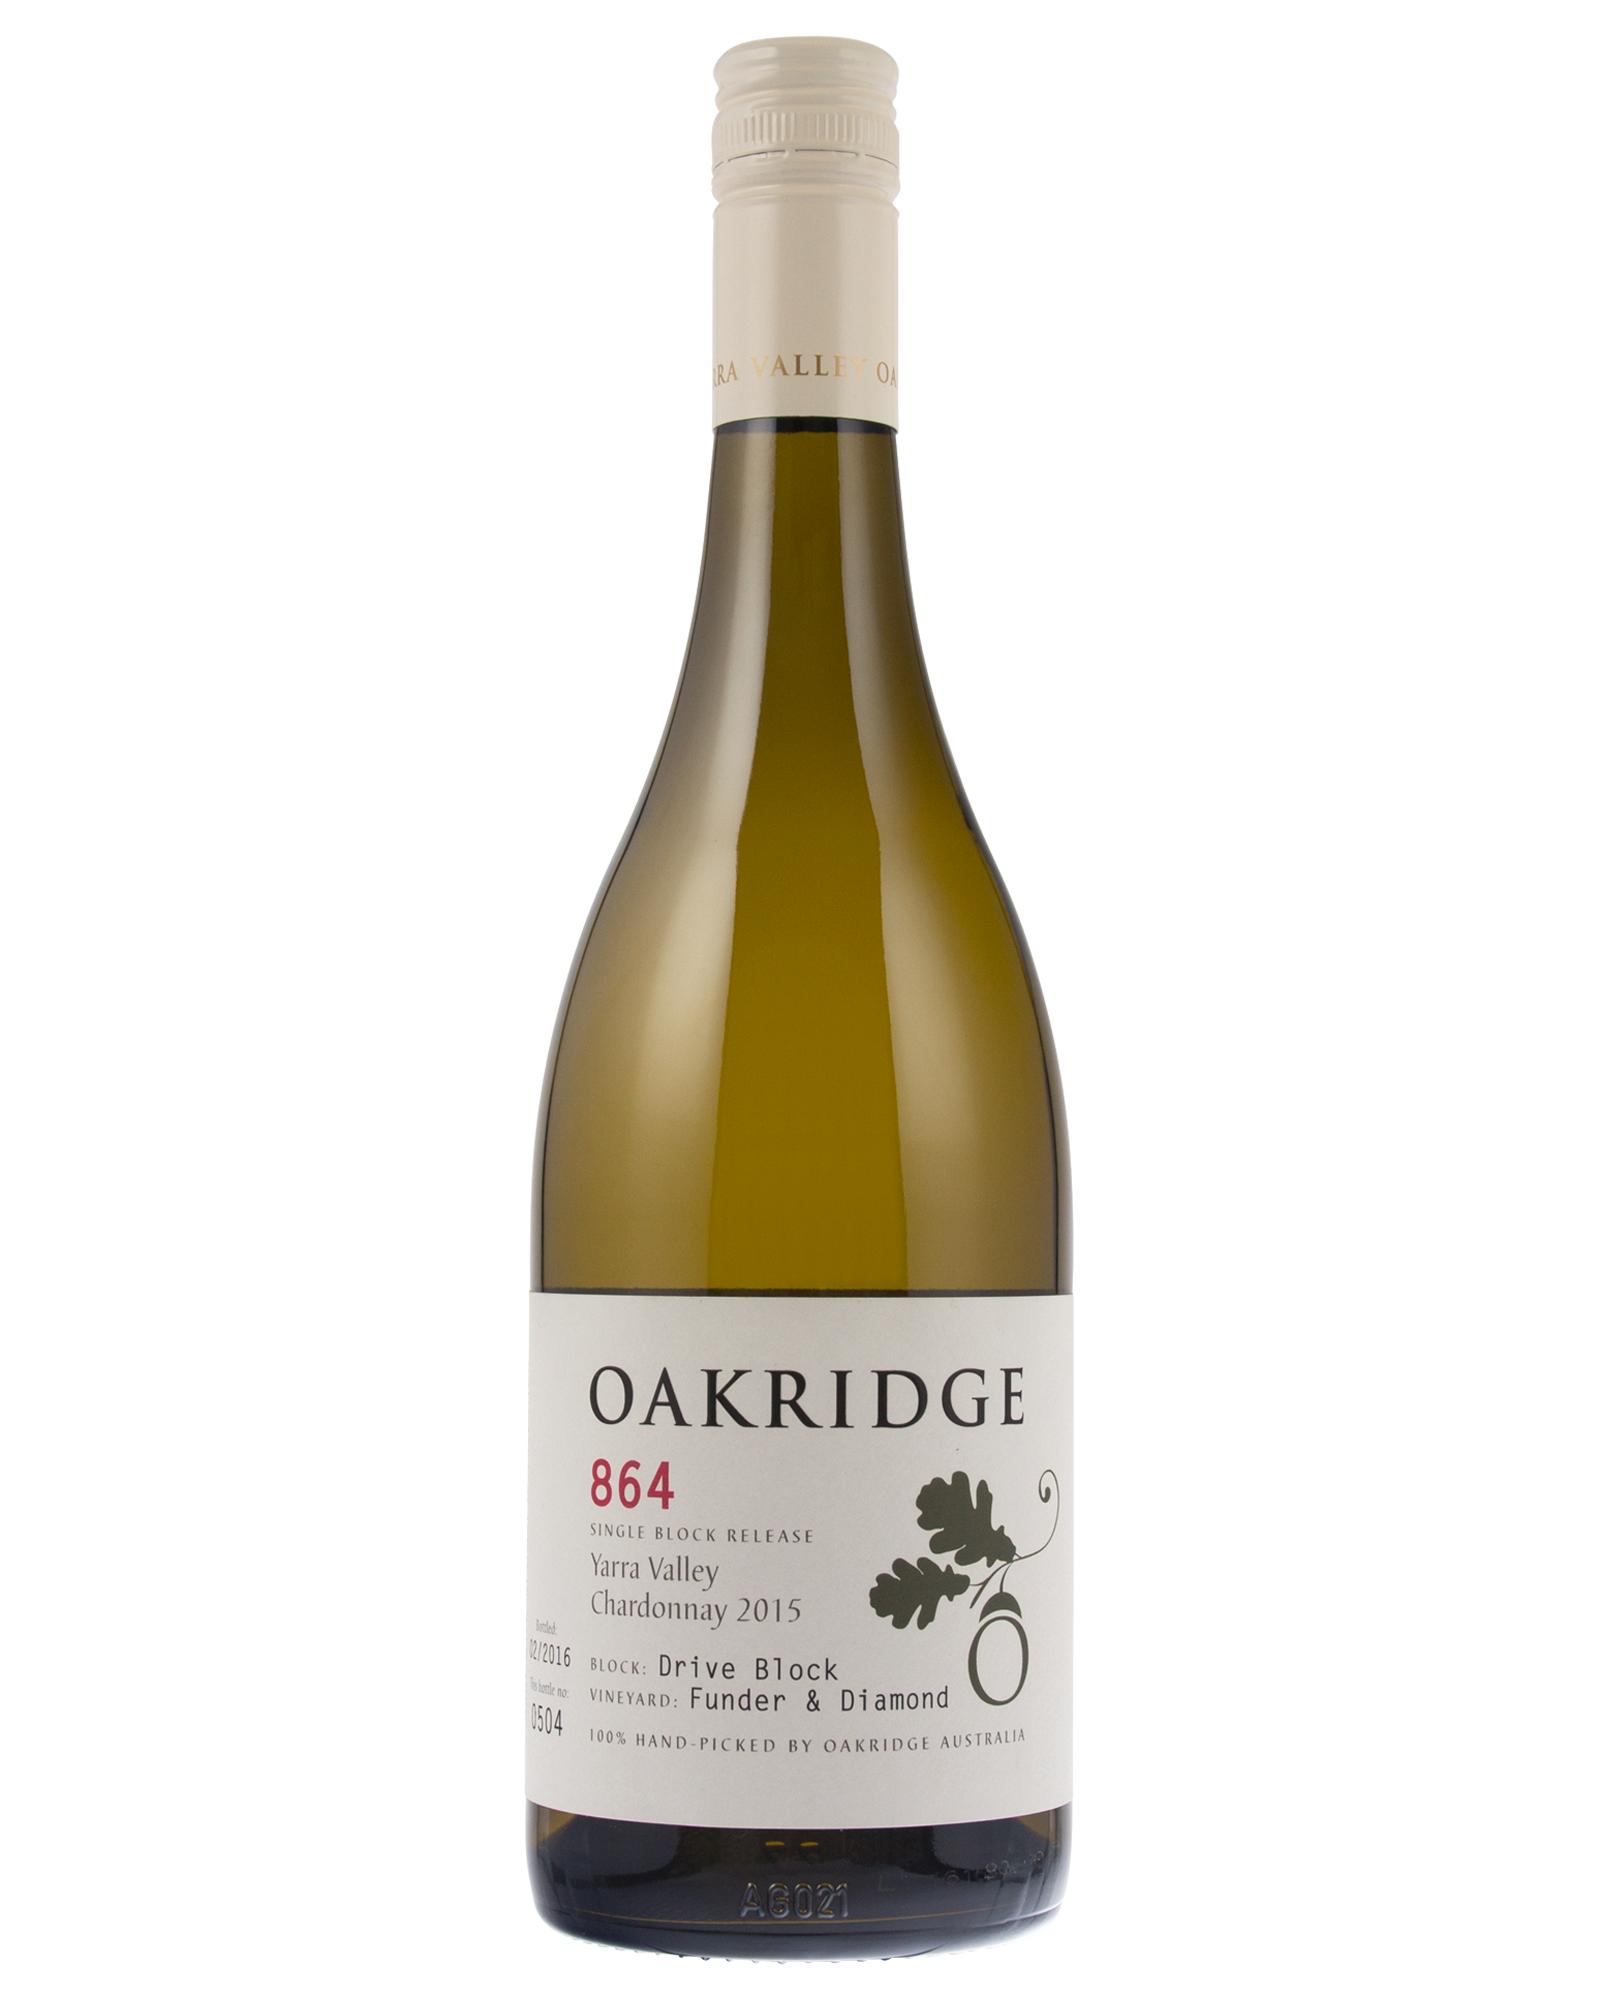 Oakridge 864 Funder & Diamond Vineyard Drive Block Chardonnay